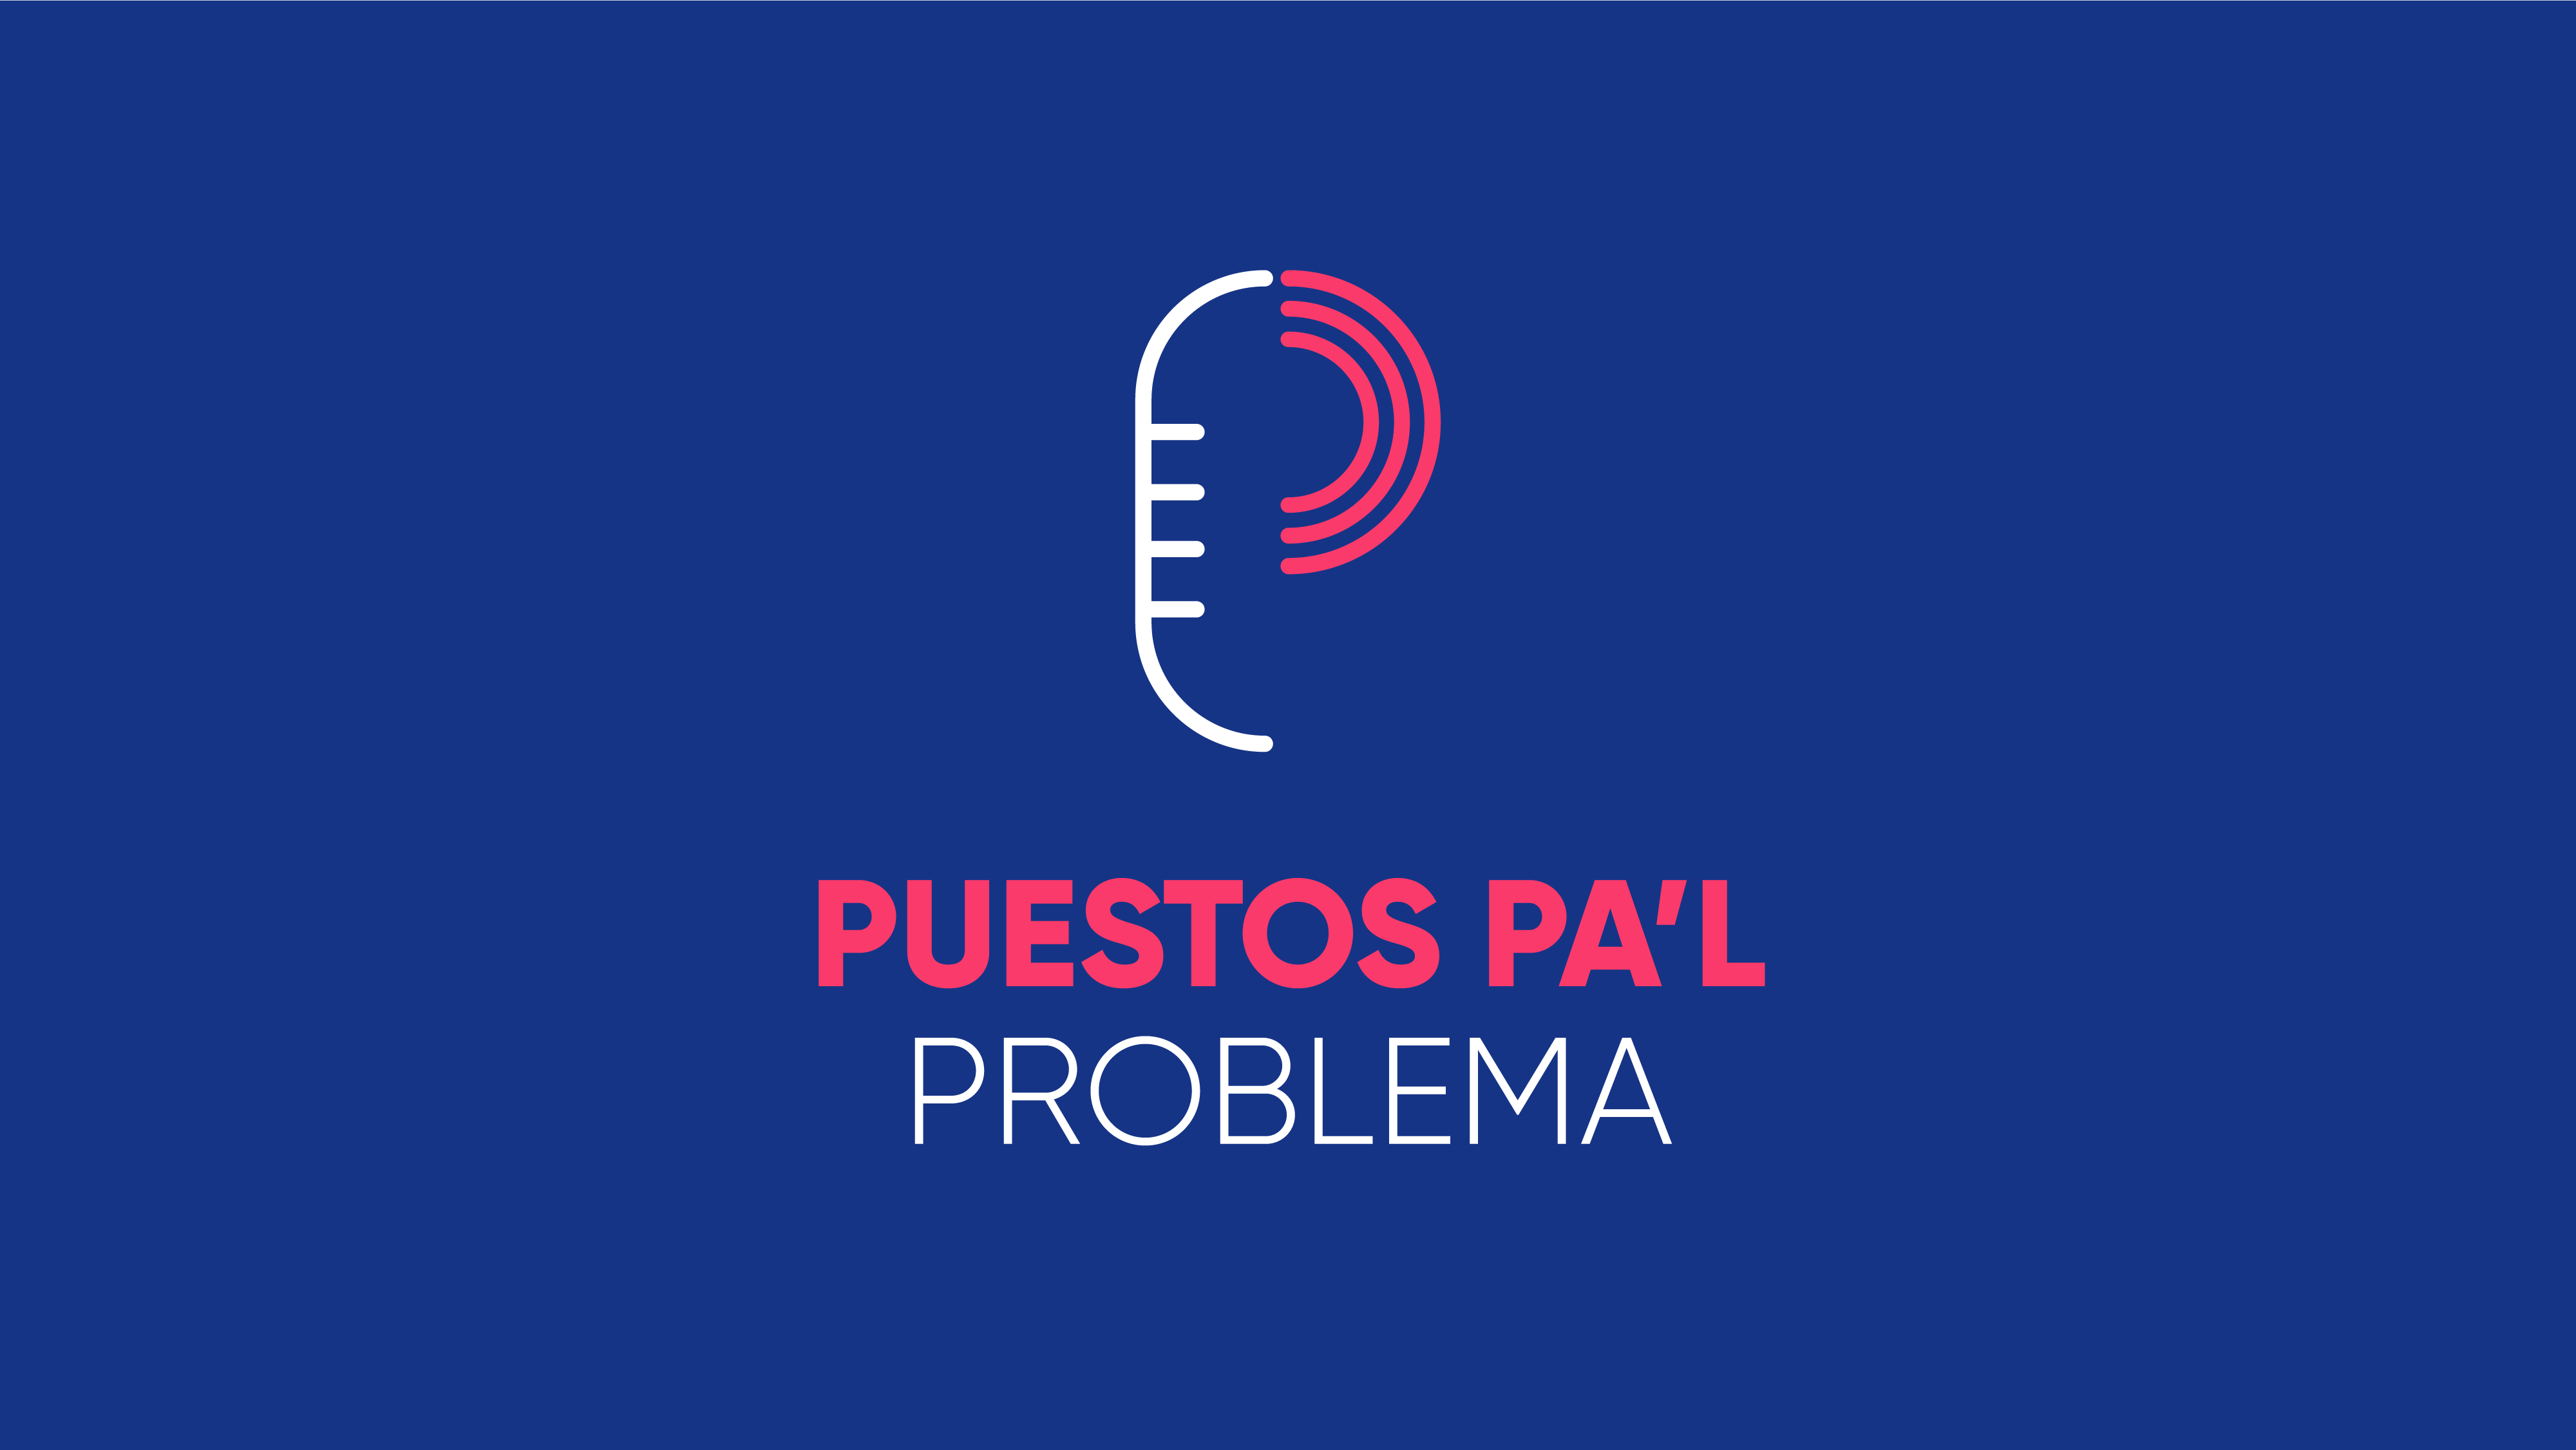 PPP Extra: Podcast del año según MTV